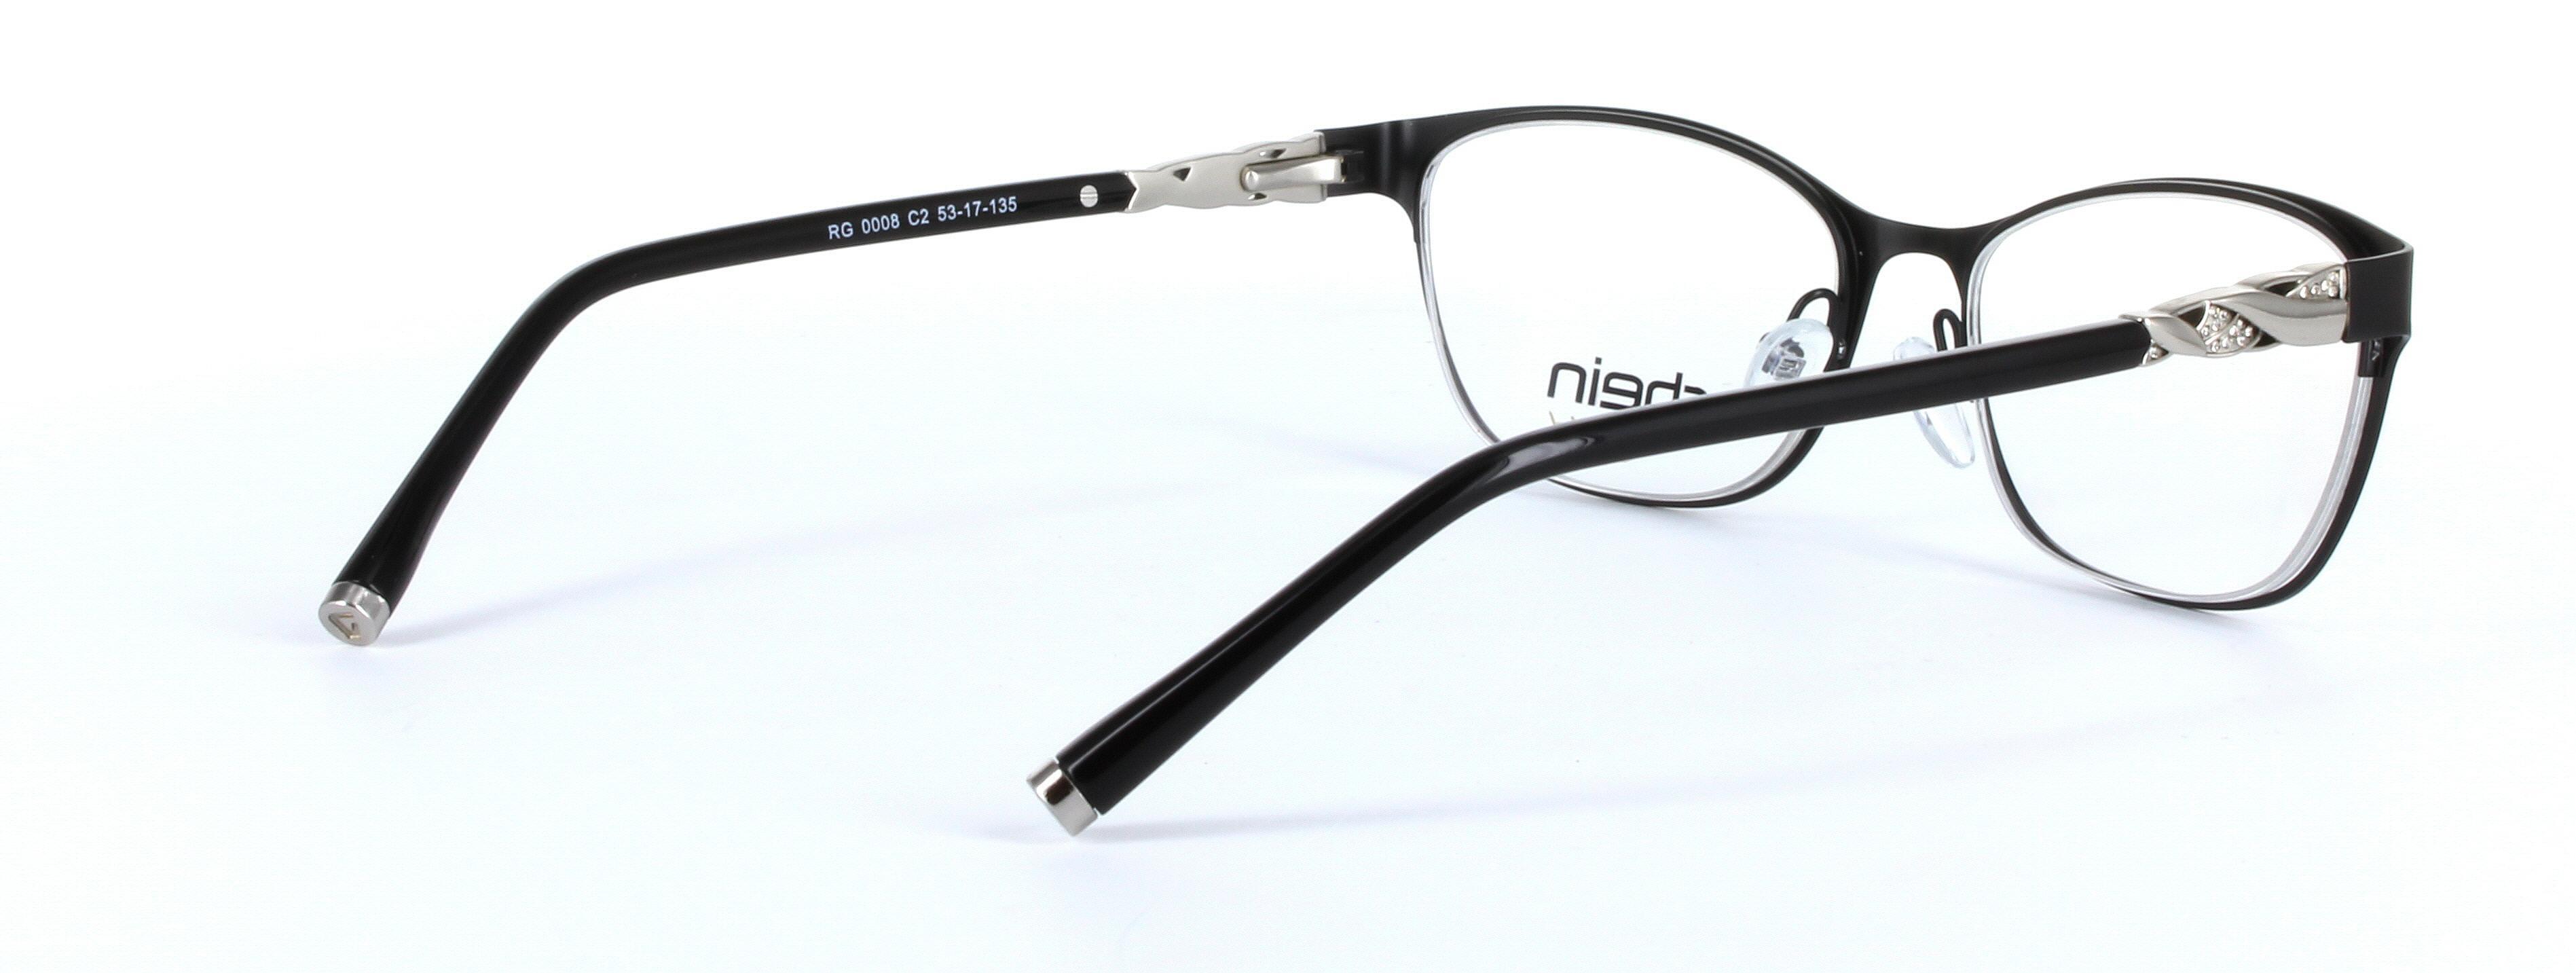 Nova Black Full Rim Oval Round Metal Glasses - Image View 4